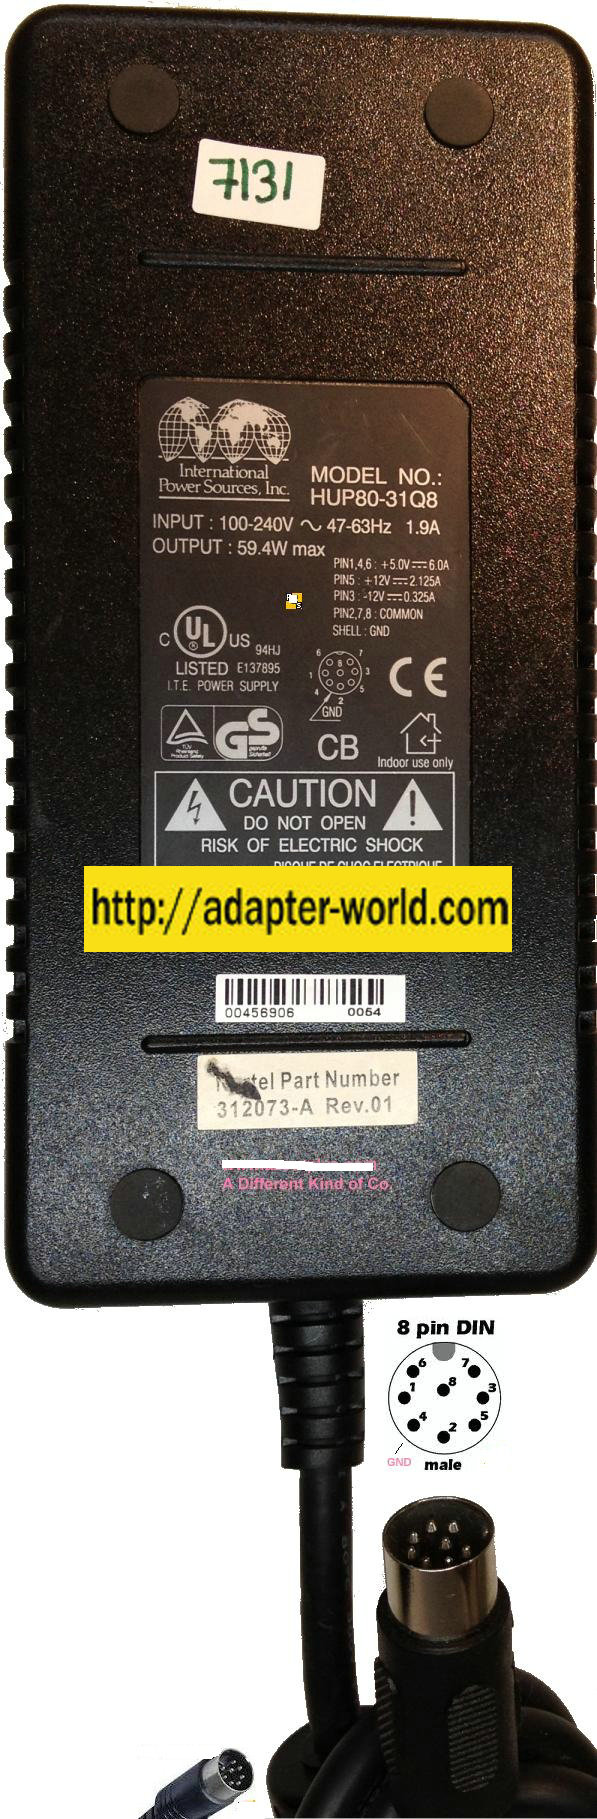 INTERNATIONAL POWER SOURCE HUP80-31Q8 AC ADAPTER 5VDC 6A 12V 2.1